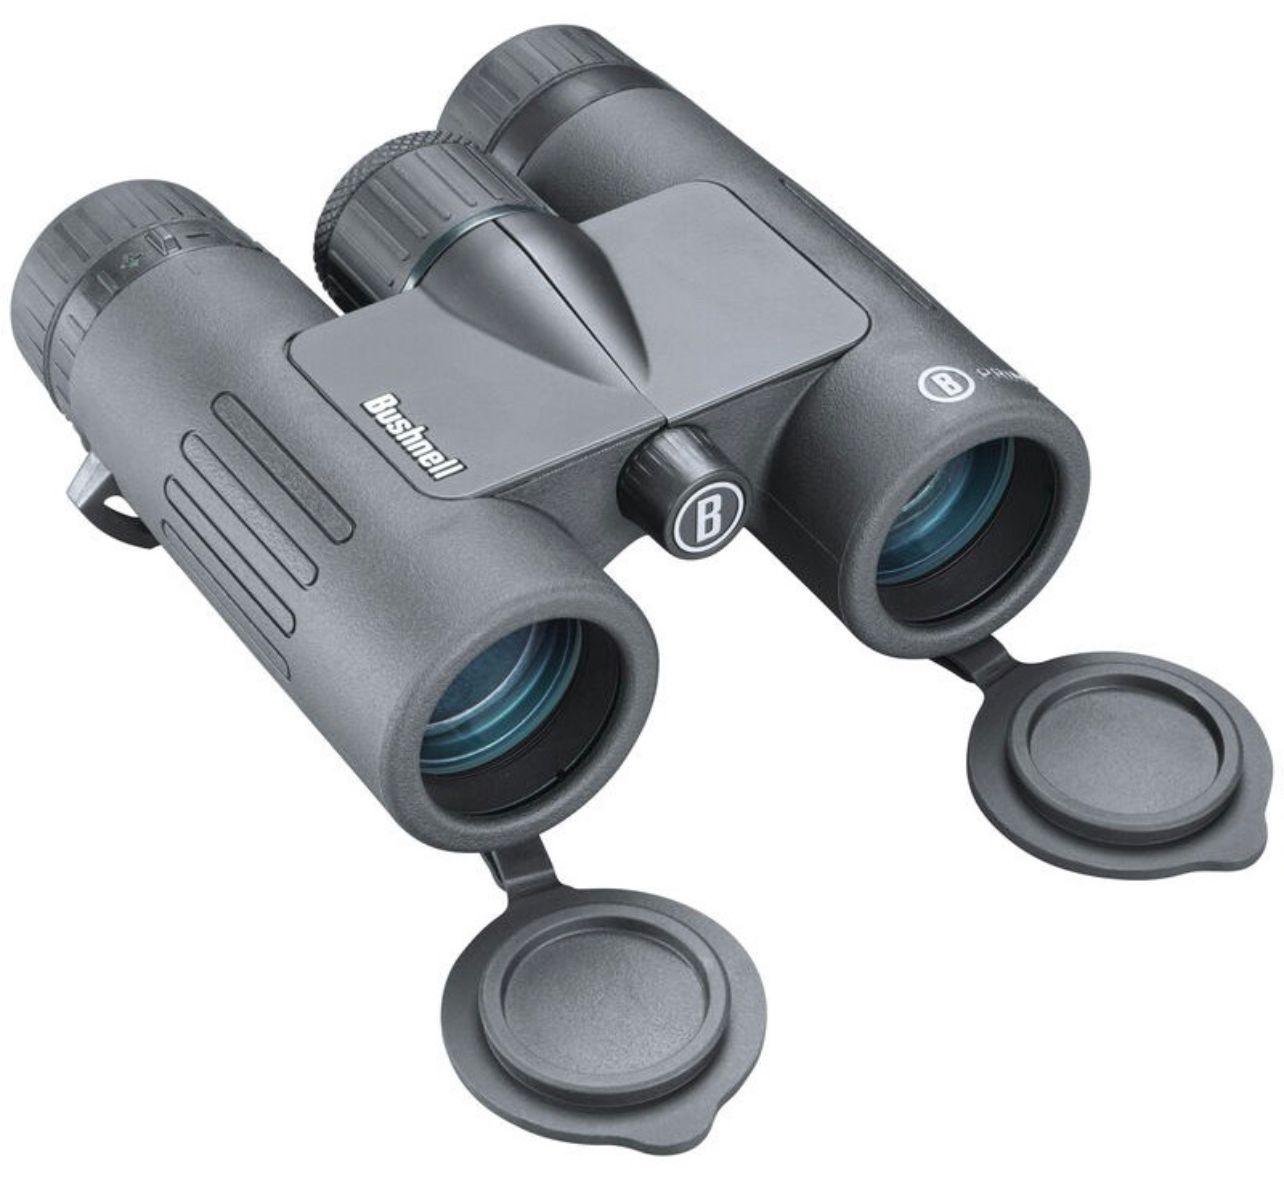 Bushnell Binoculars Prime 8x32 (BPR832B) - Limited Lifetime Warranty